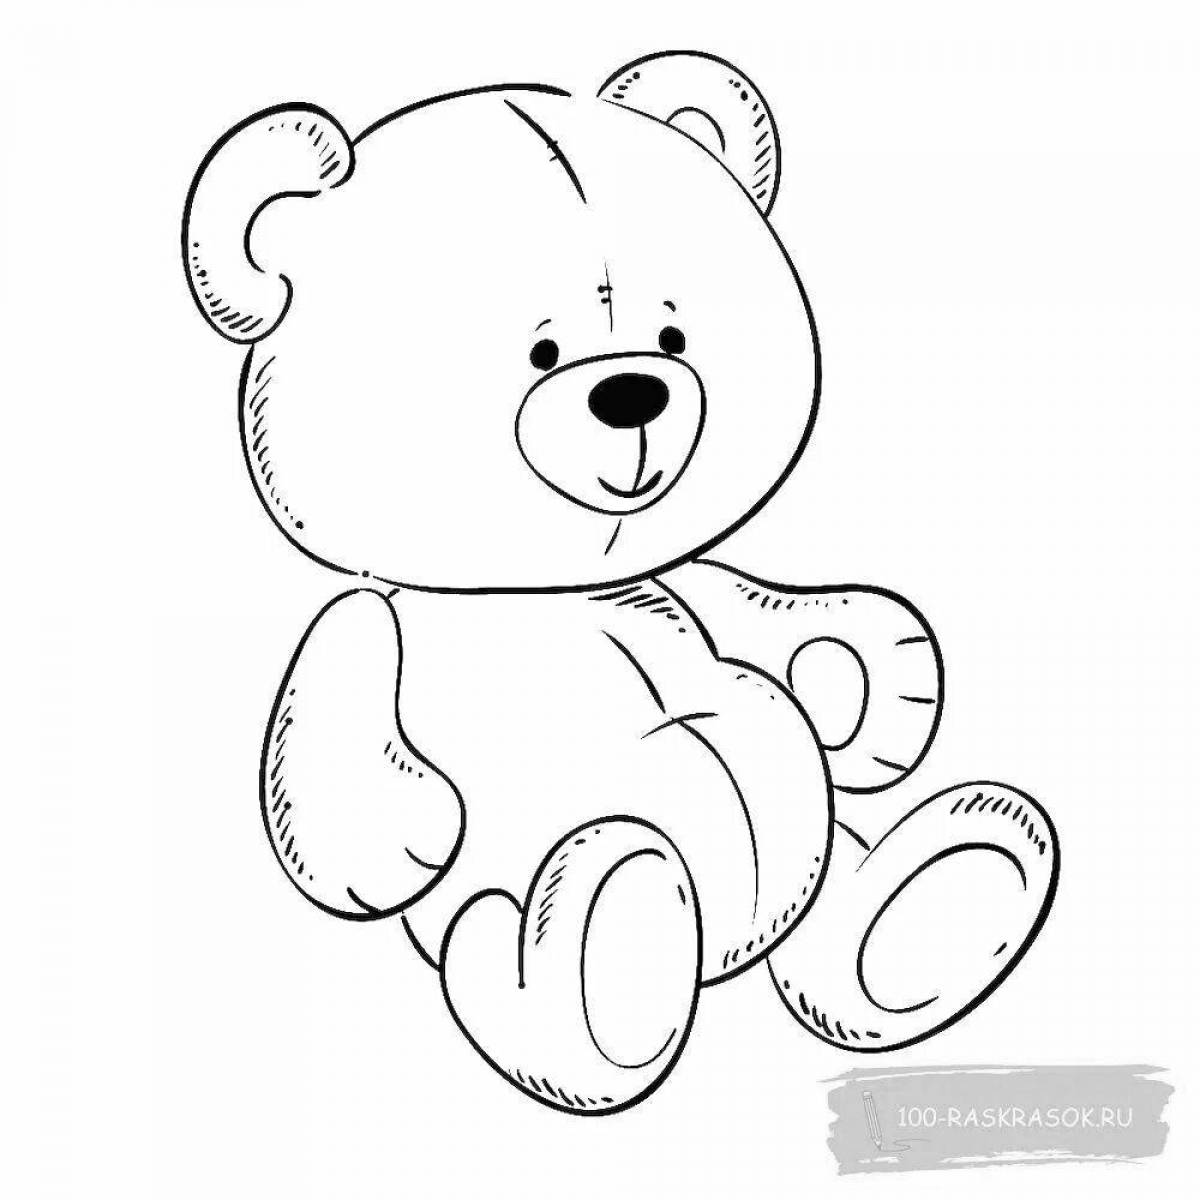 Coloring book loving teddy bear